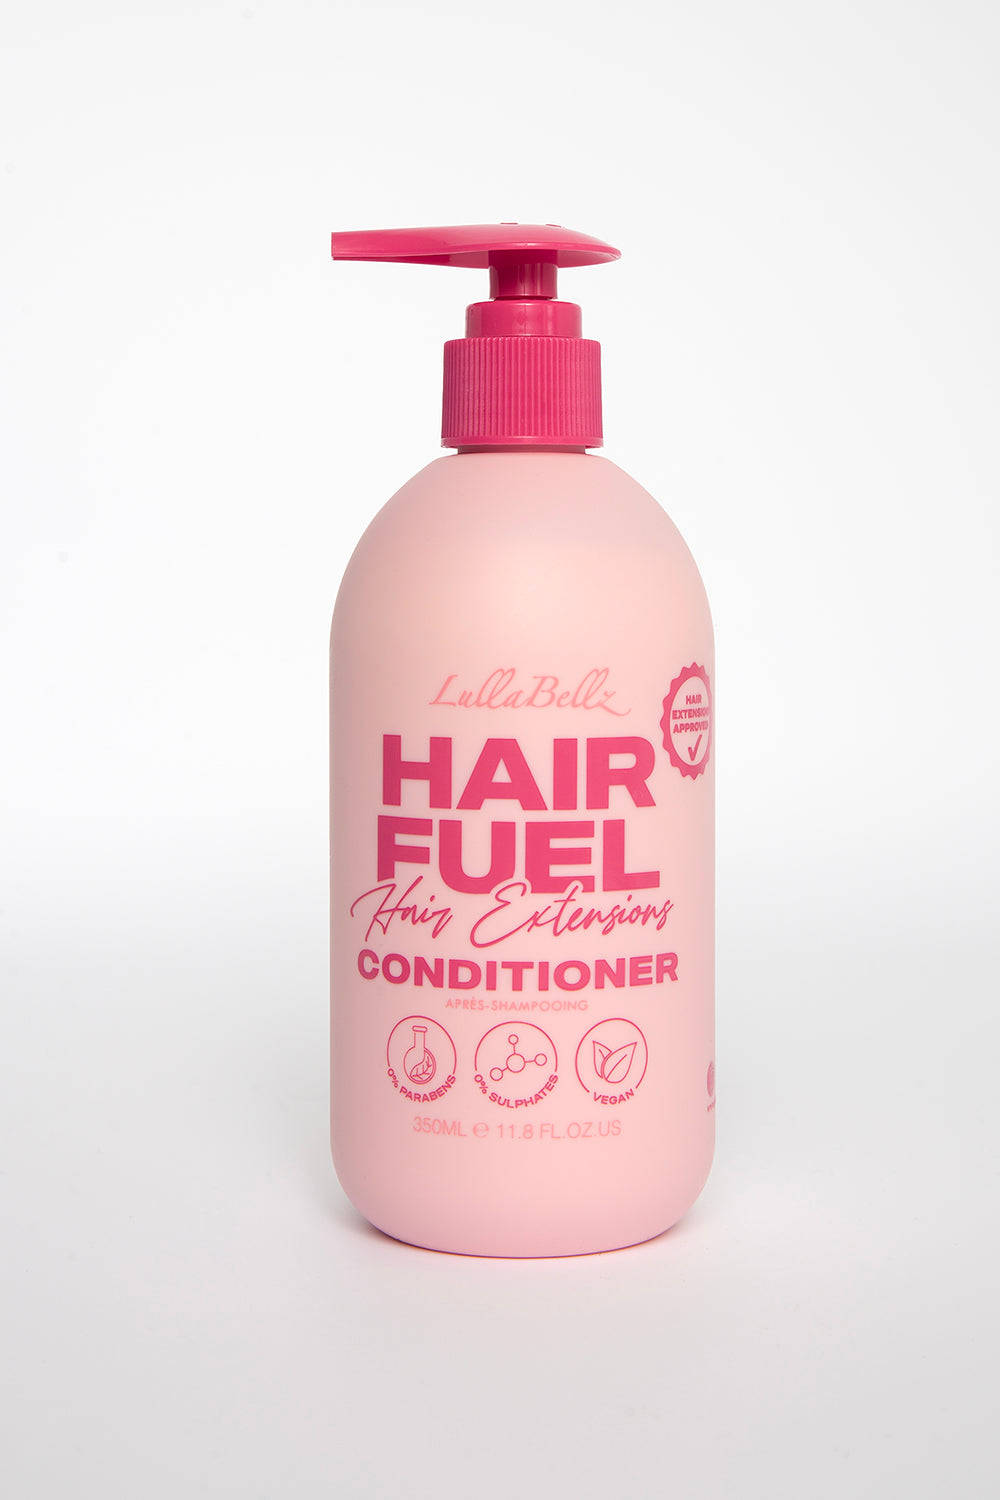 Lullabellz Hair Fuel Conditioner 350ml